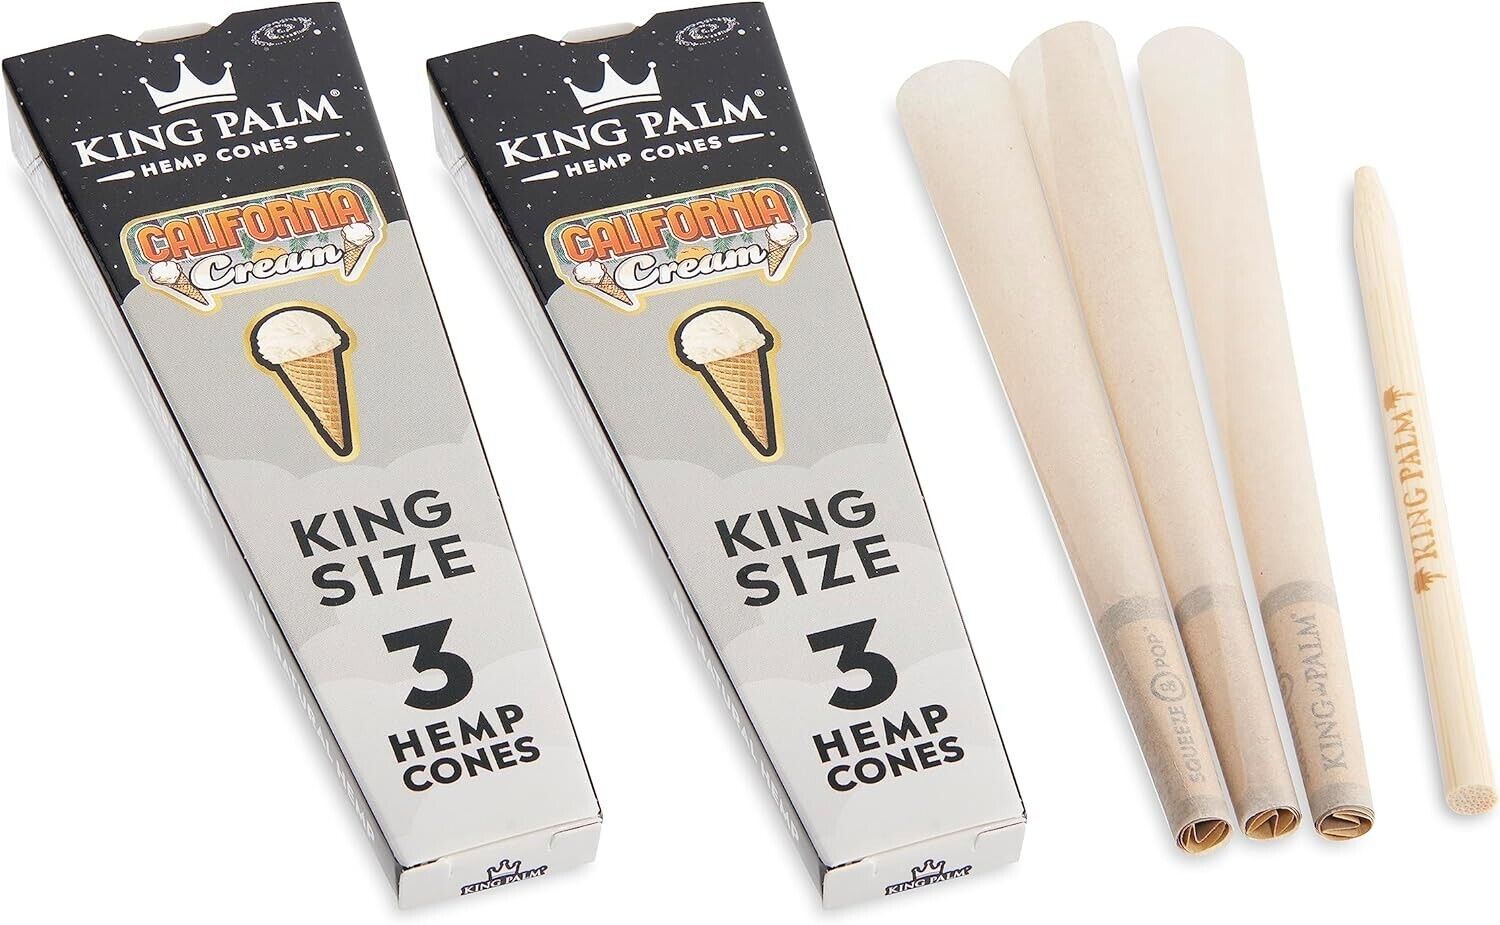 King Palm | King Size | California Cream | 2 Packs of 3 Each = 6 Rolls